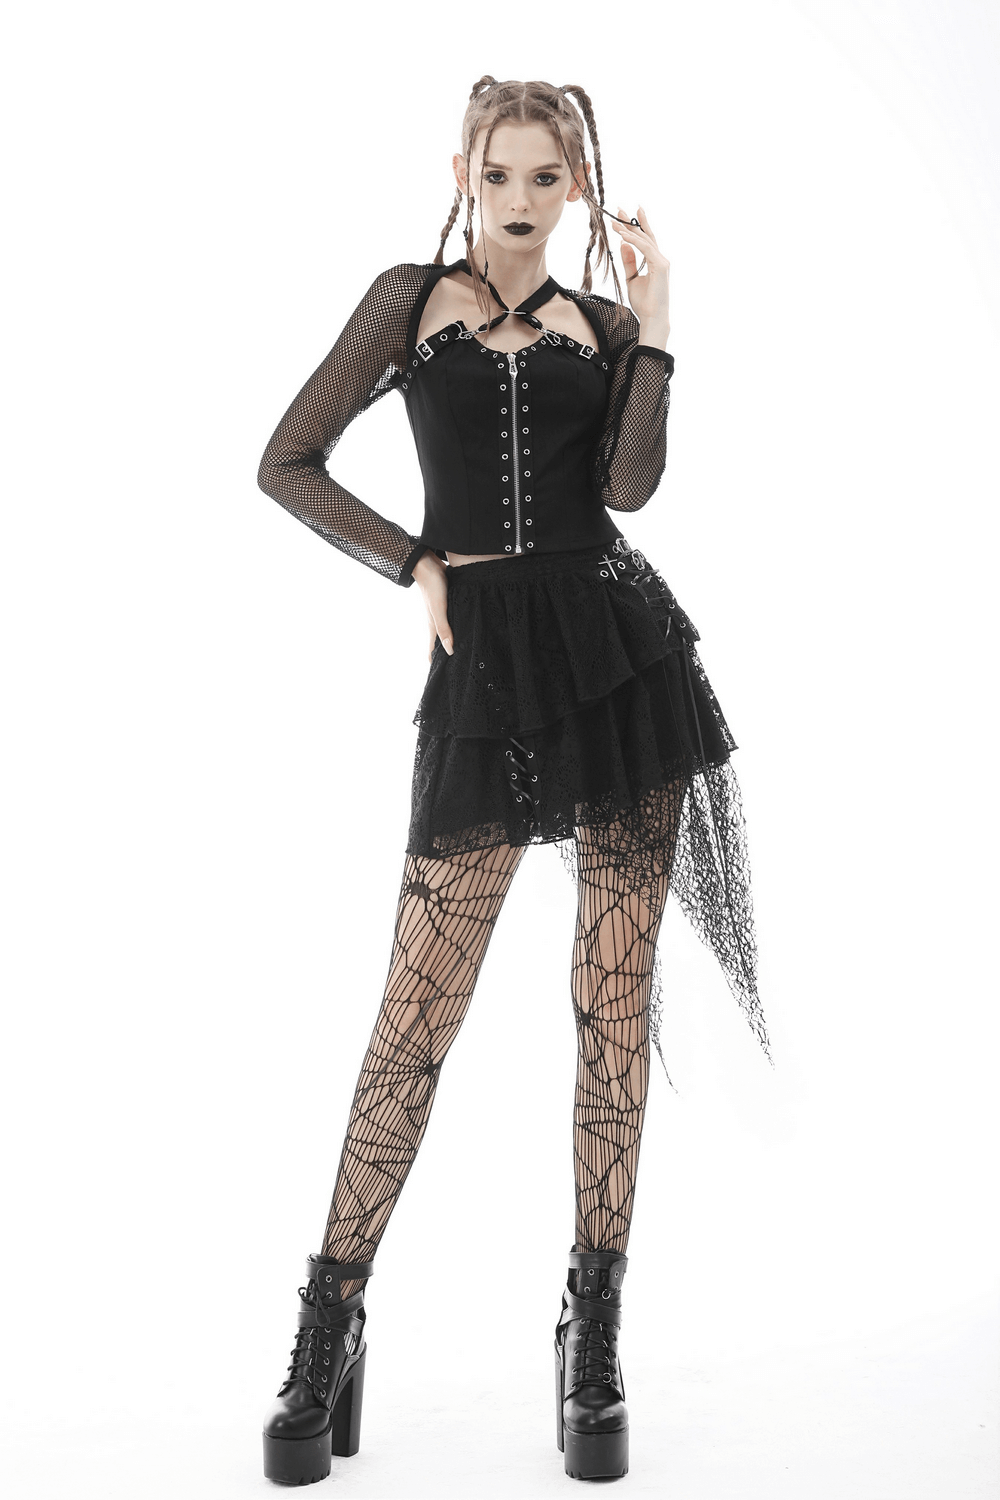 Dark Gothic Lace Mini Skirt with Edgy Mesh Overlay